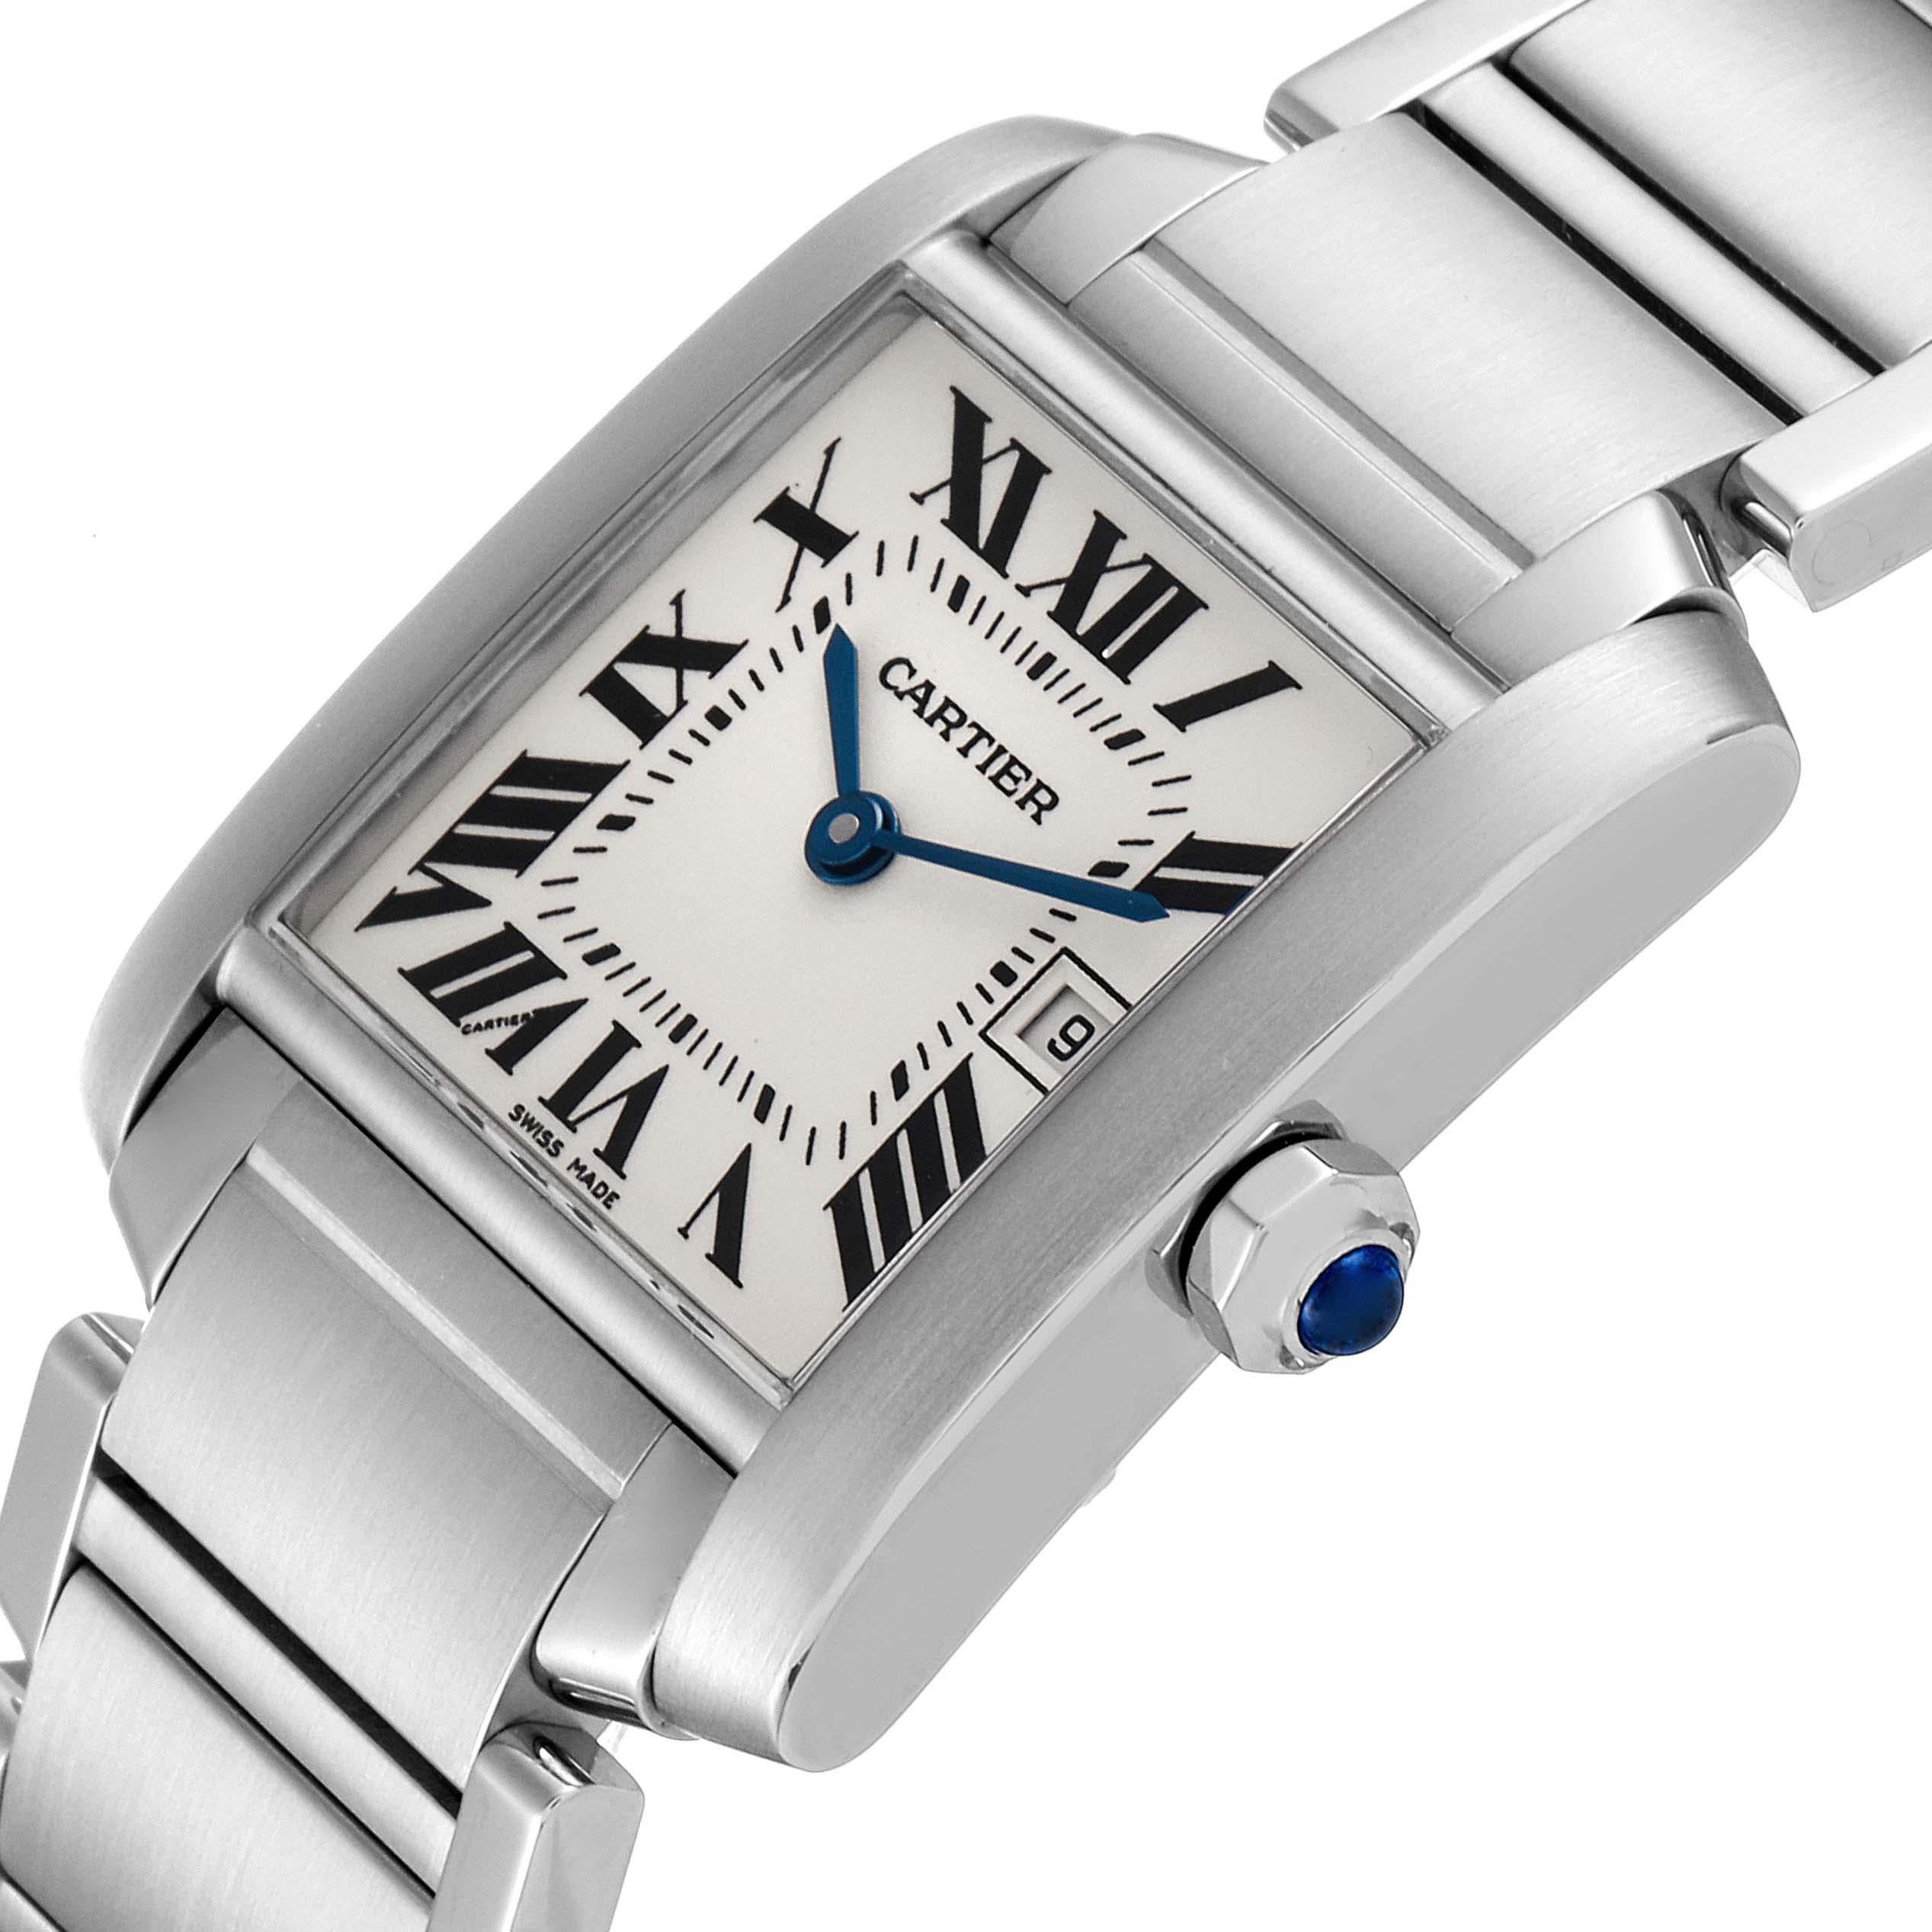 Cartier Tank Francaise Midsize Silver Dial Ladies Watch W51011Q3 For Sale 2